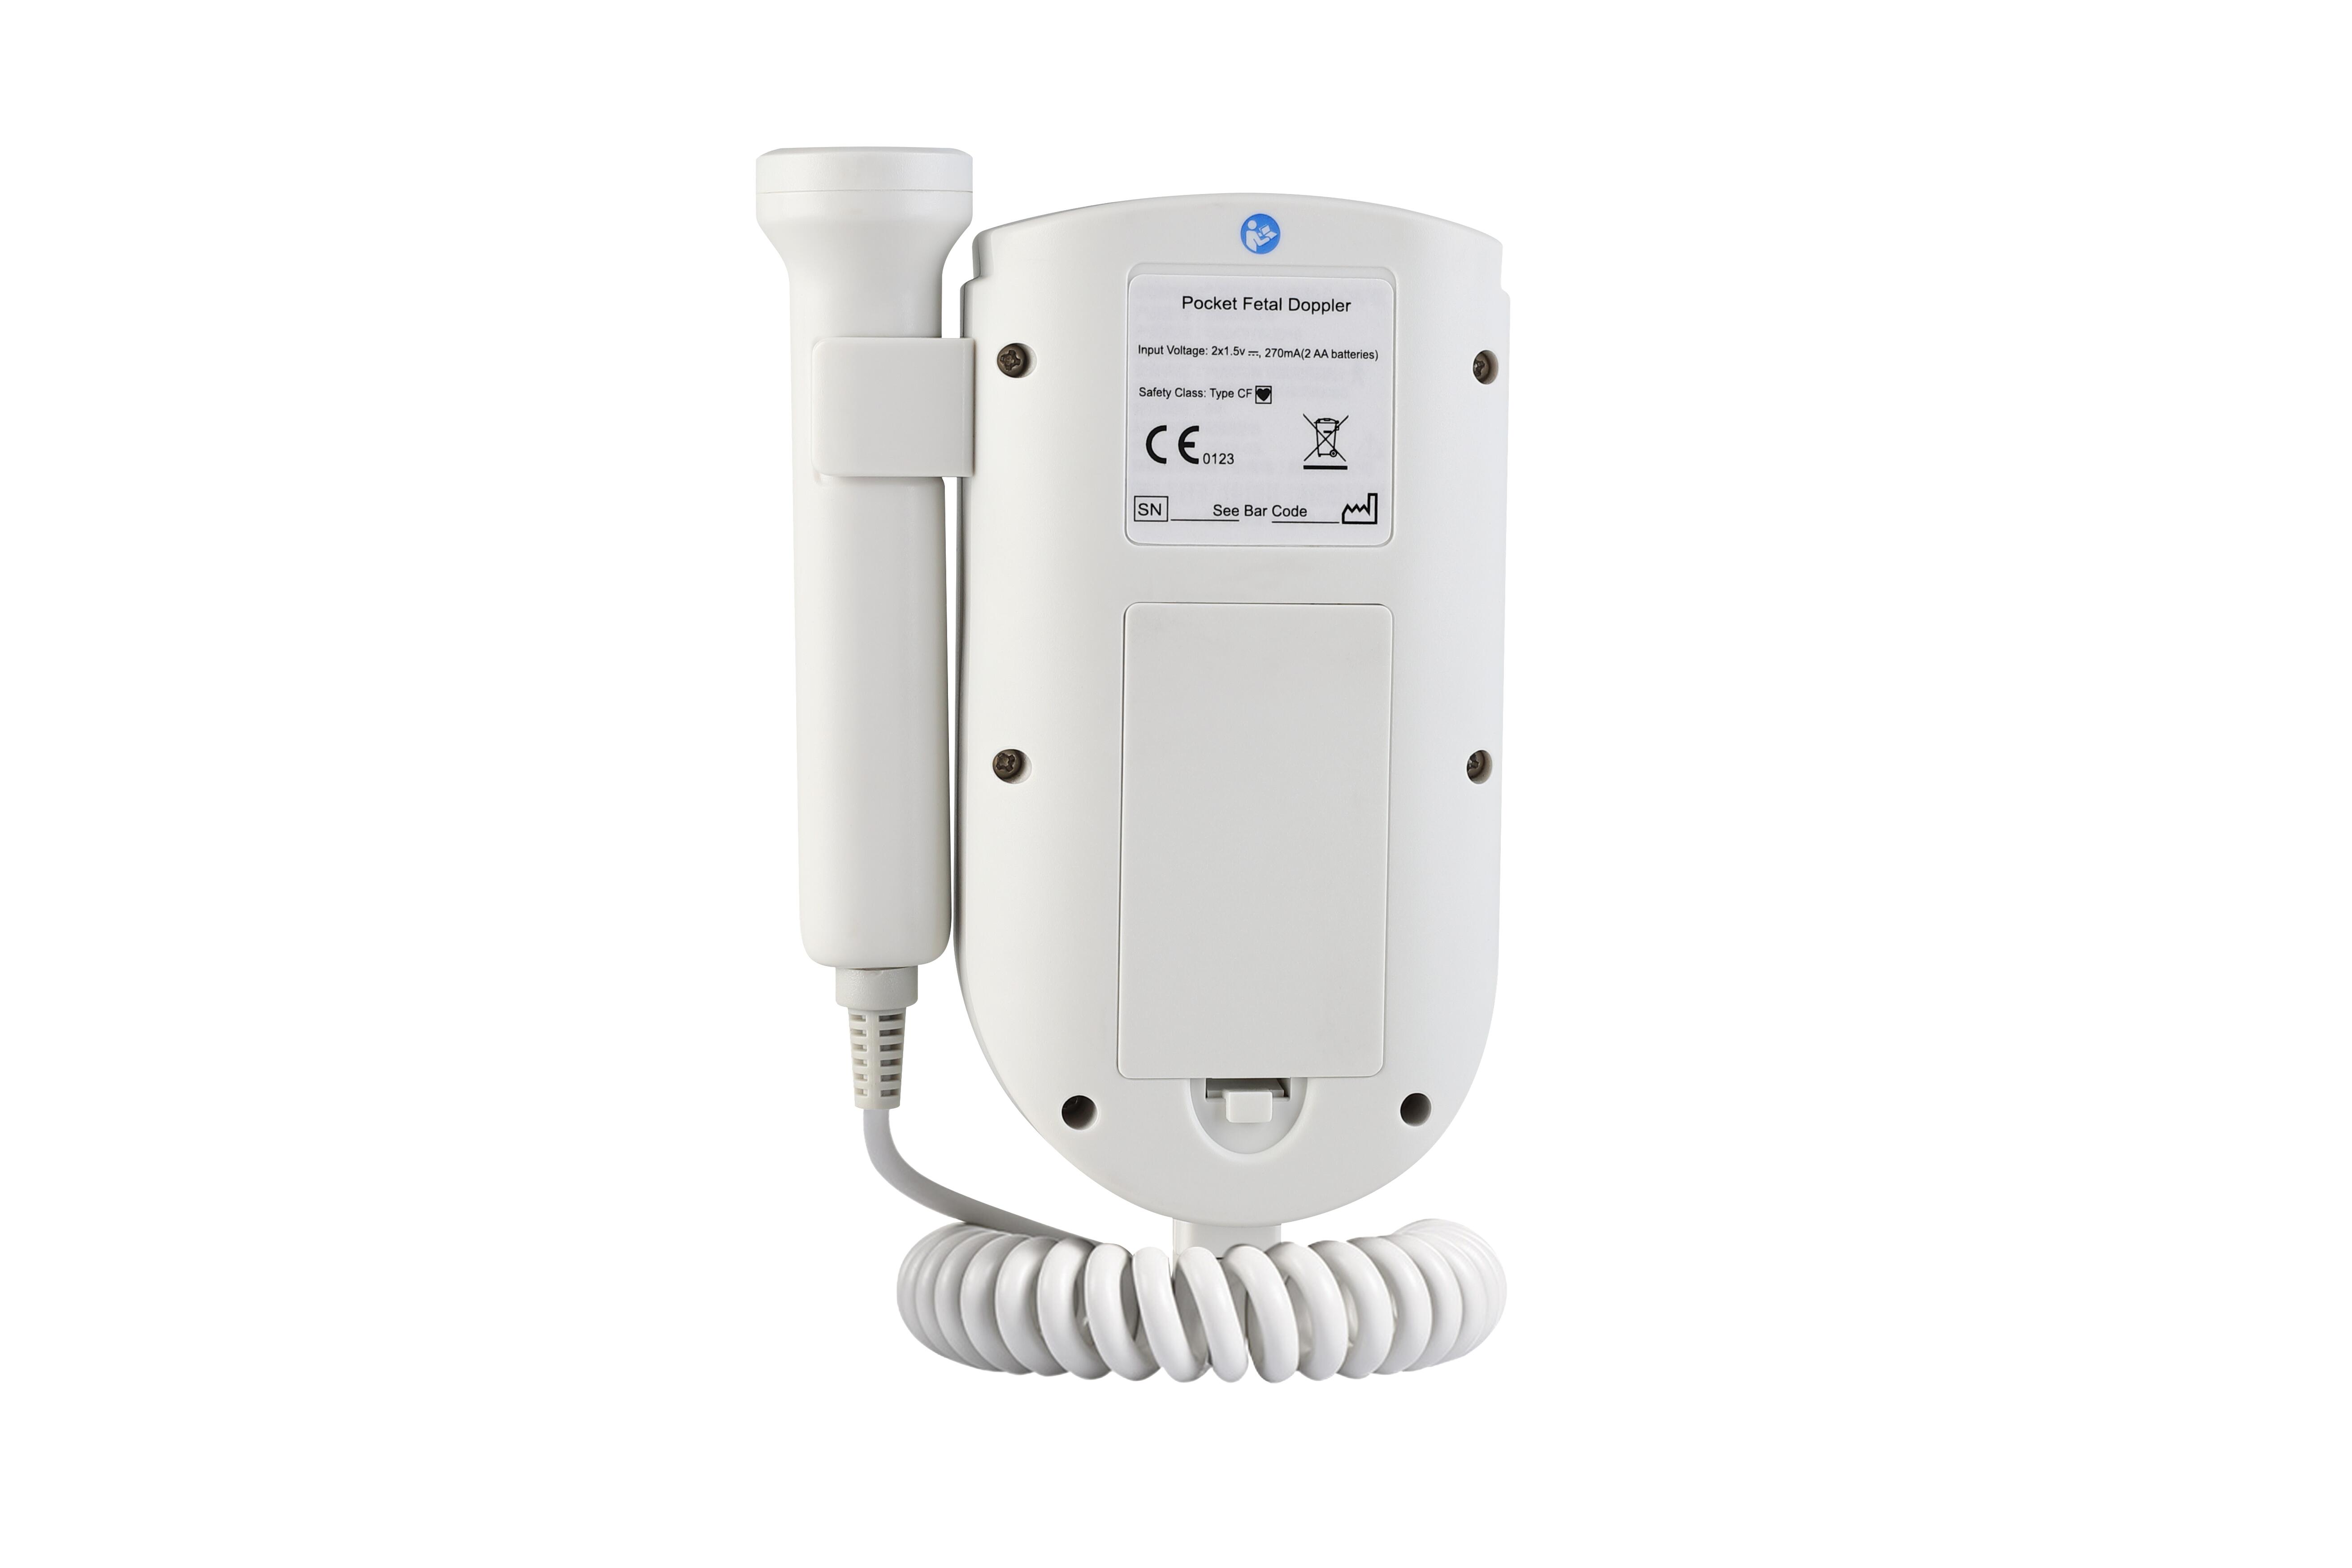 Built-in loudspeaker Fetal Doppler Baby Heartbeat Monitor with 2.0MHz Probe